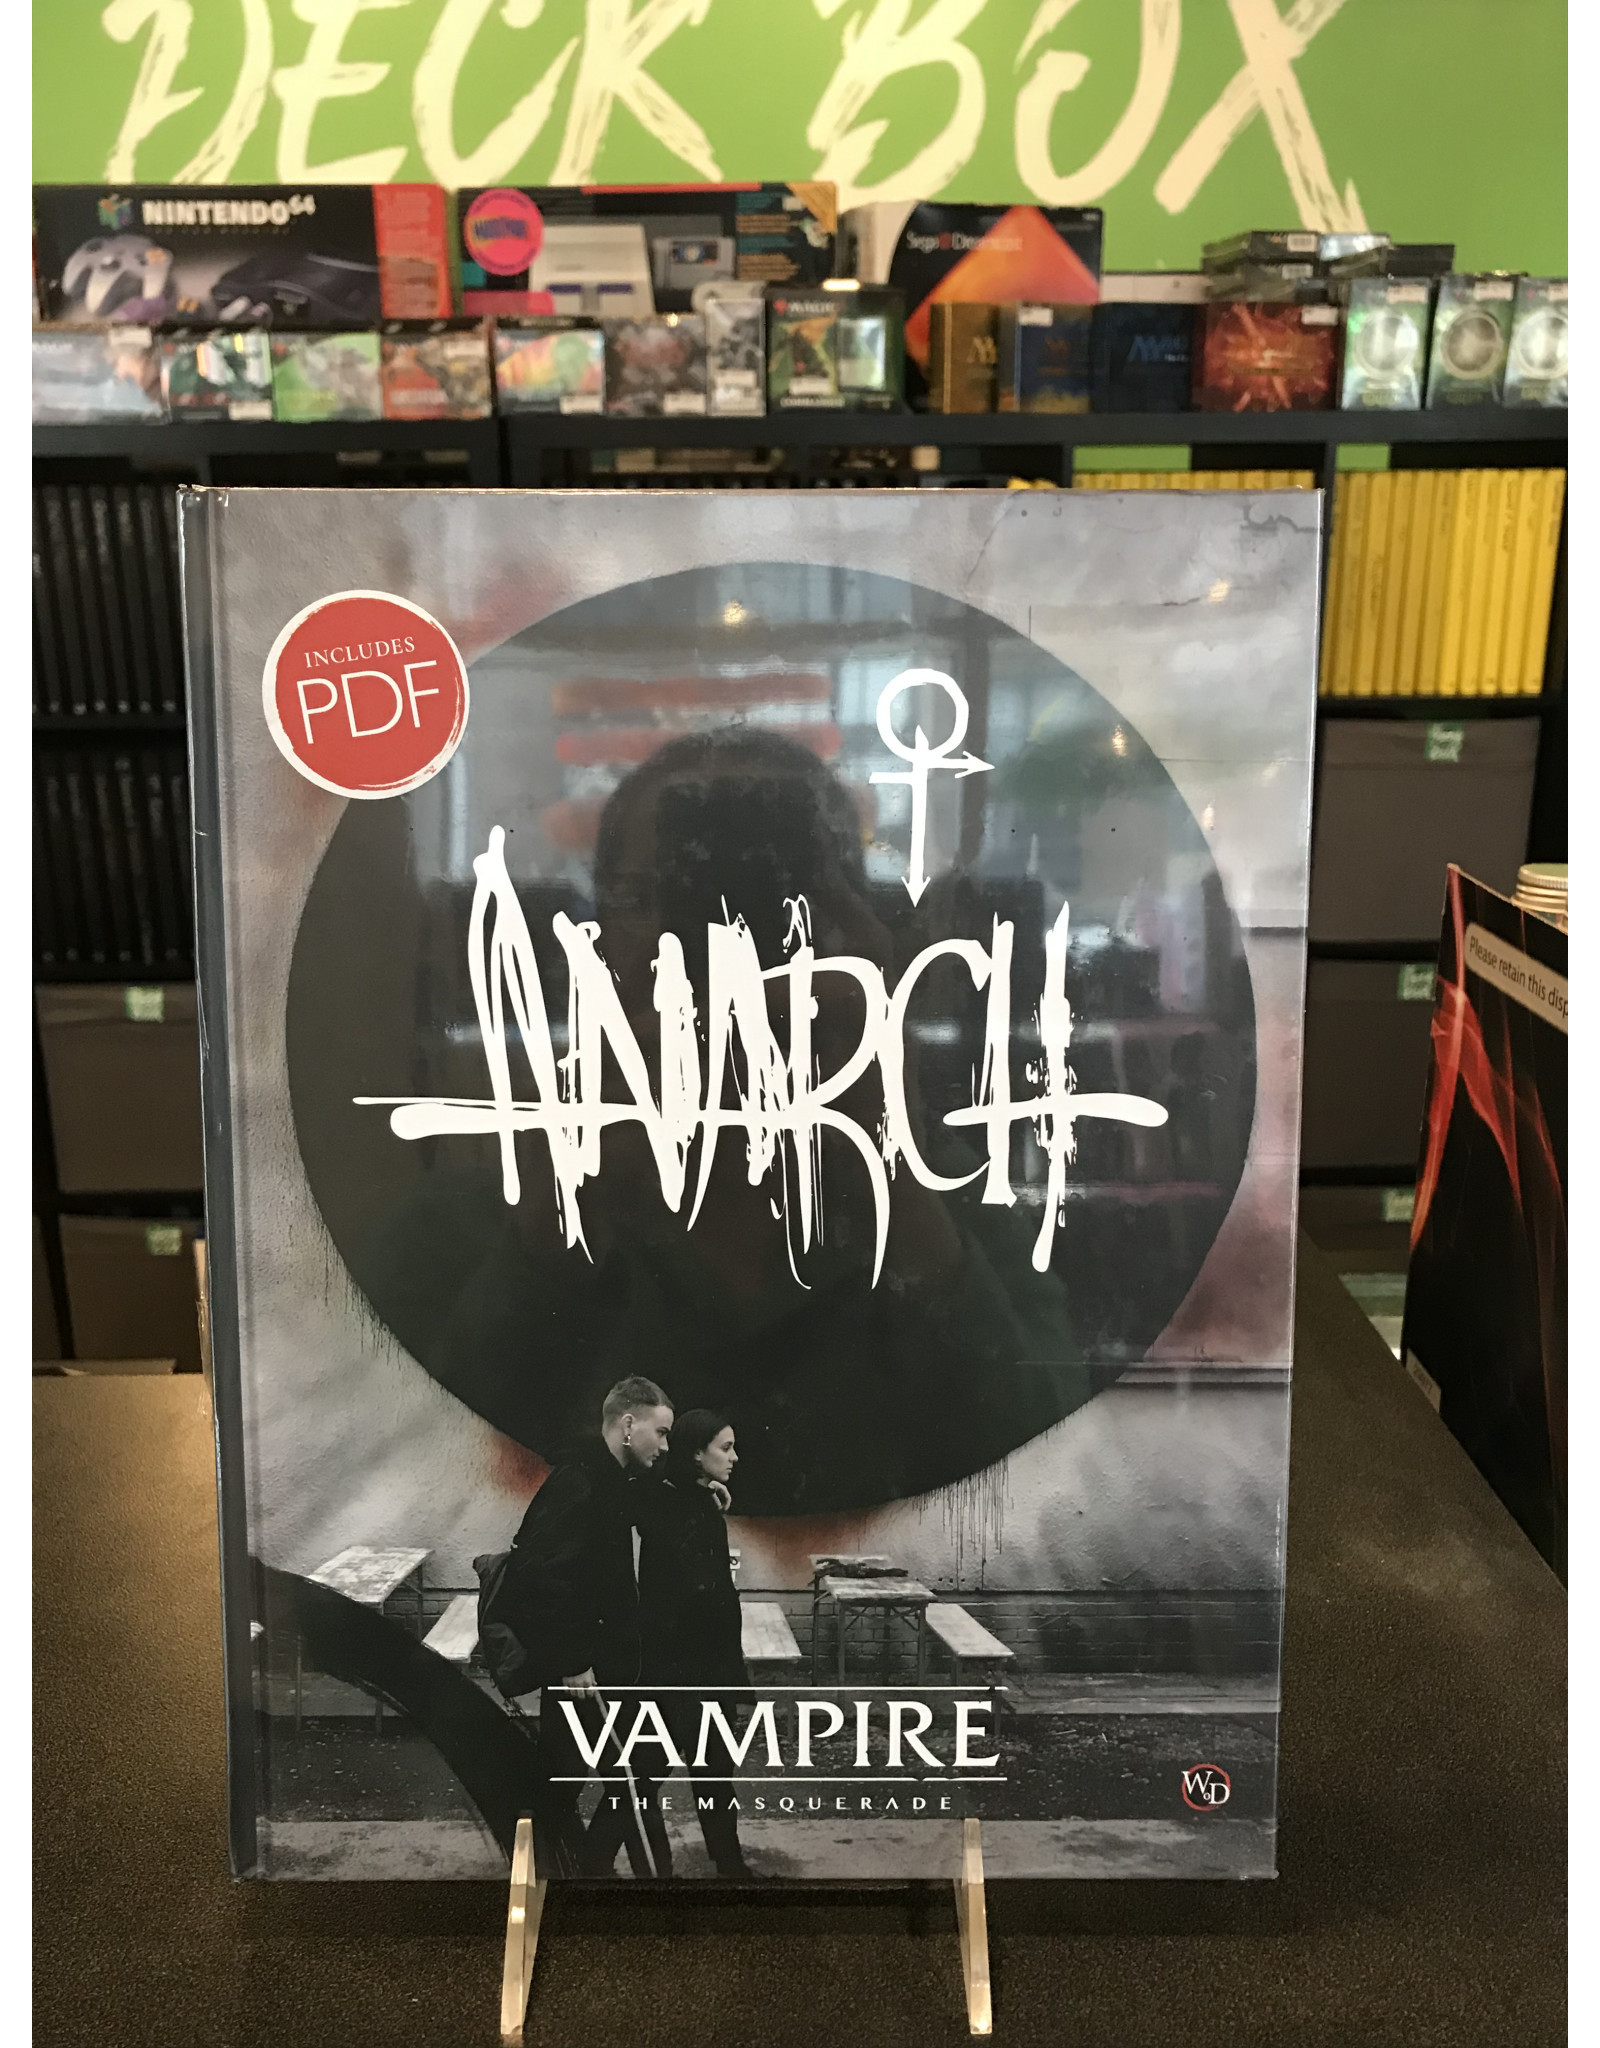 World of Darkness Vampire the Masuerade: Anarch